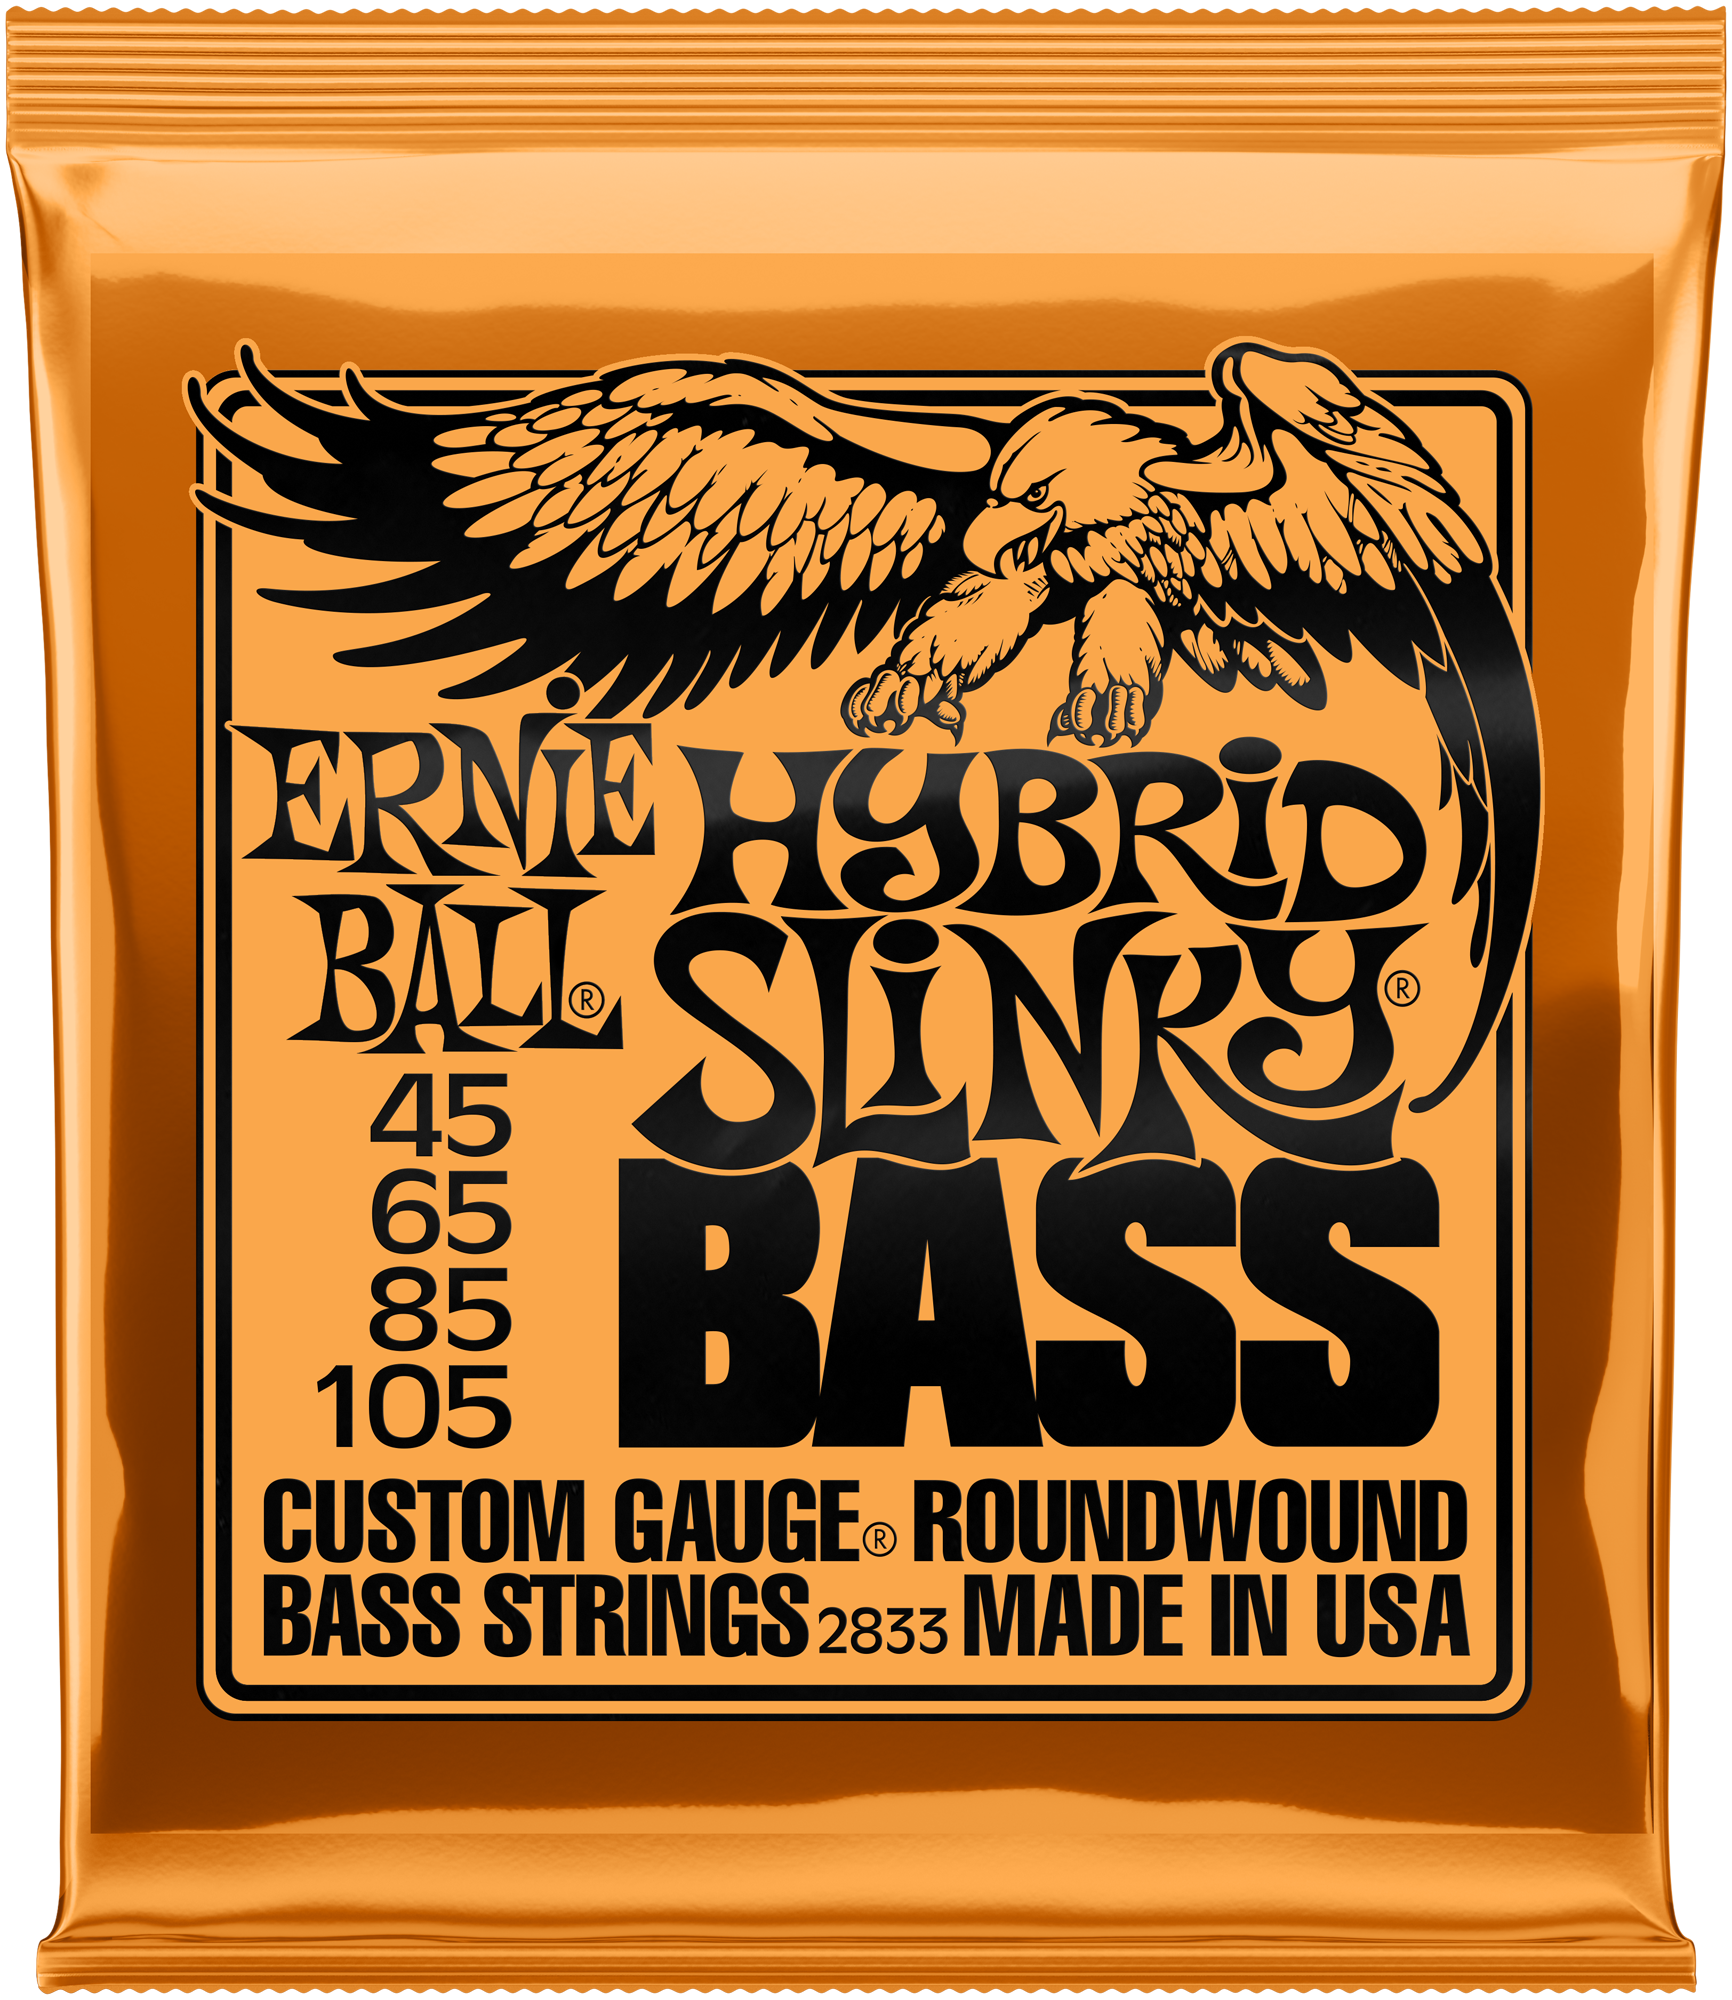 EB-2833 Hybrid Slinky Bass 045-105